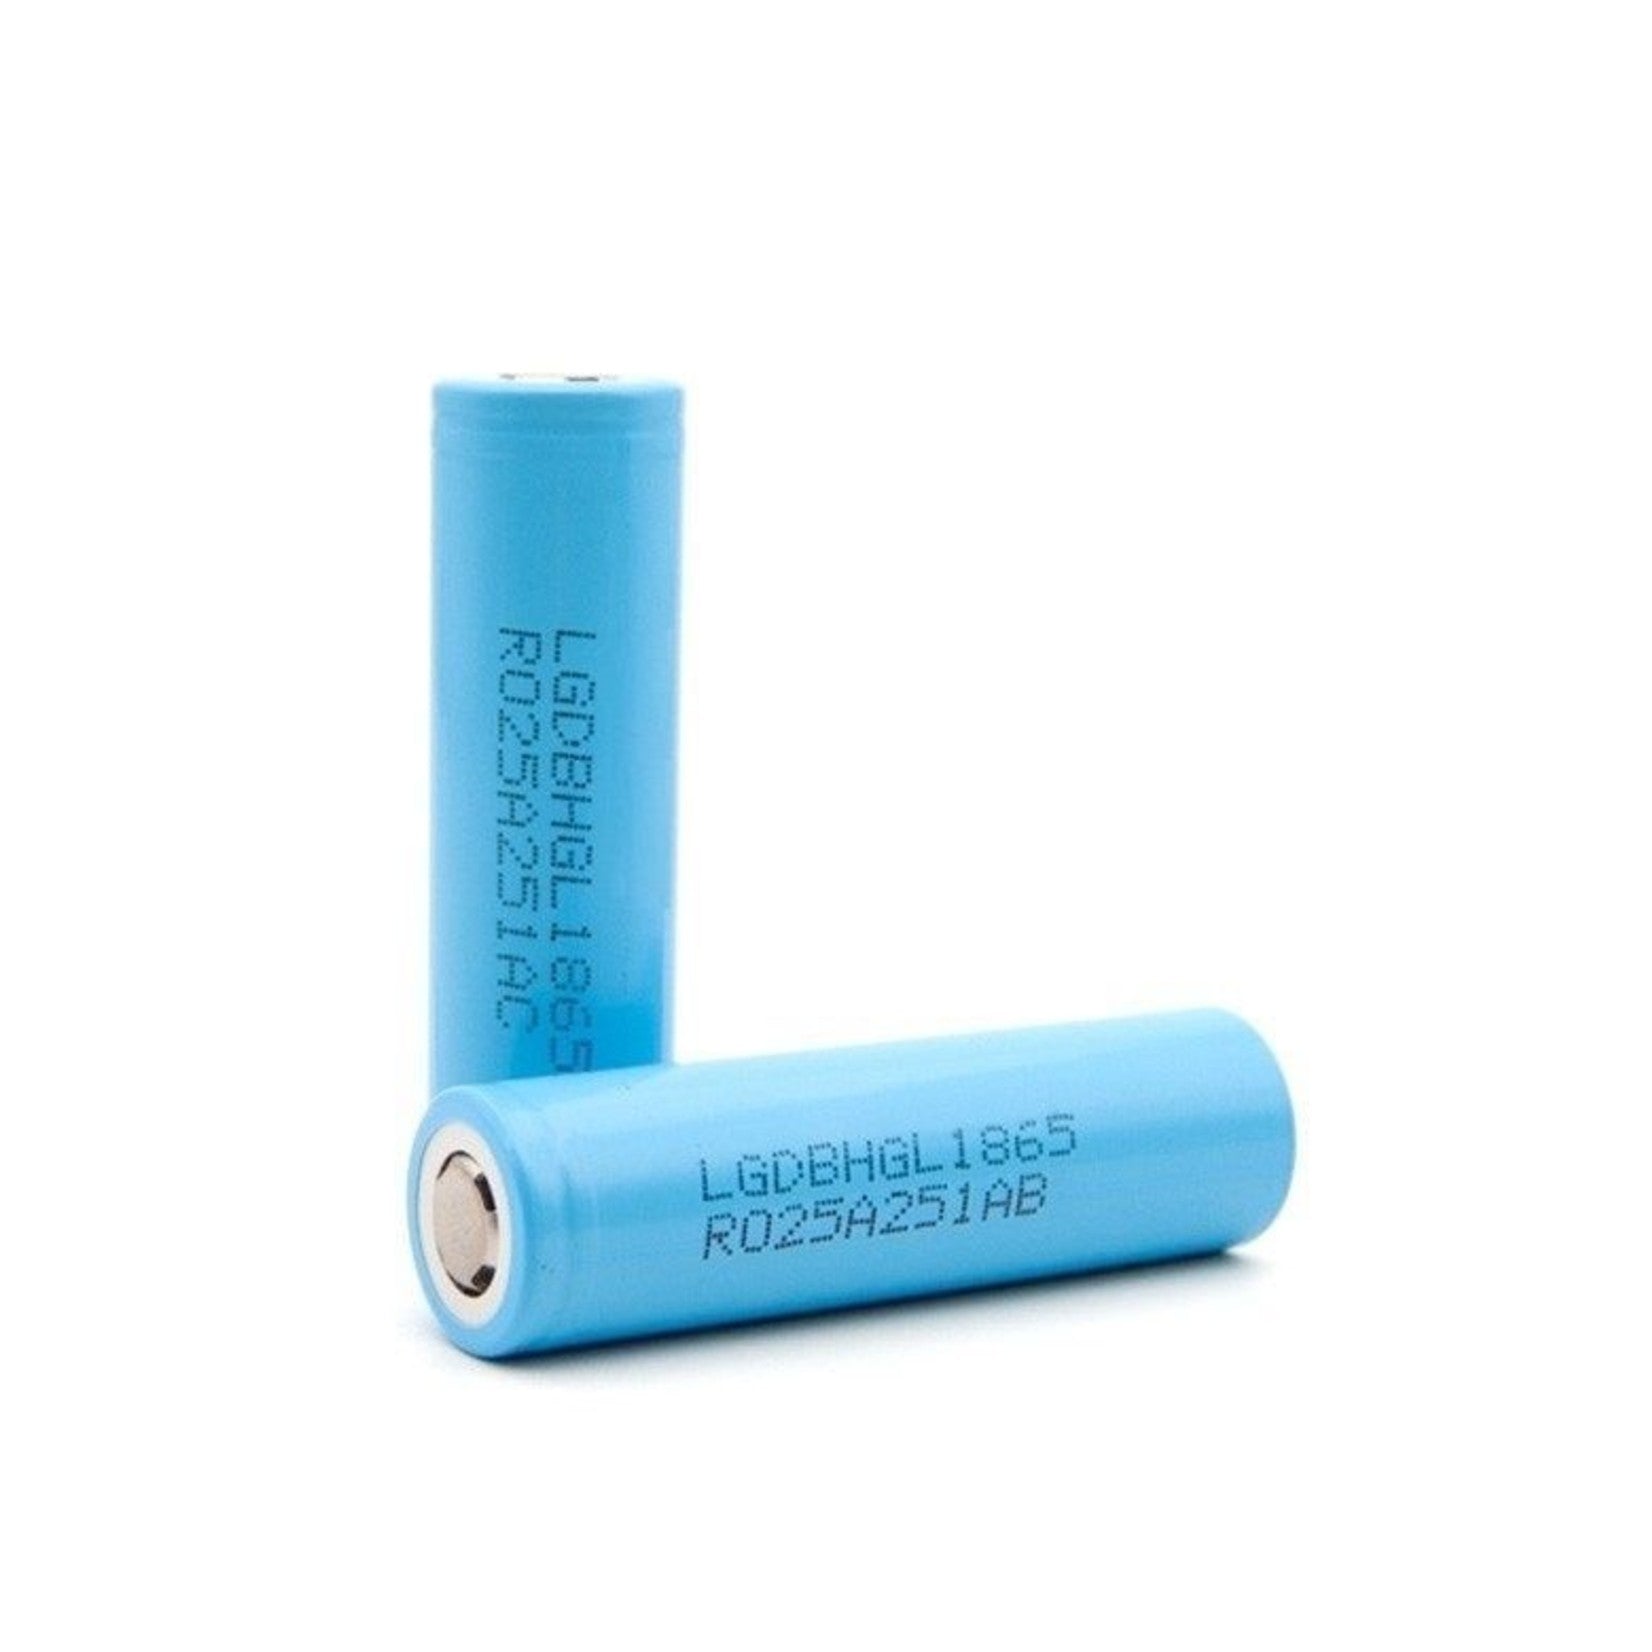 Industriebatterie LG HG2L, 18650, flat top Batterie - Dampfpalast - E-Zigarette Online Kaufen